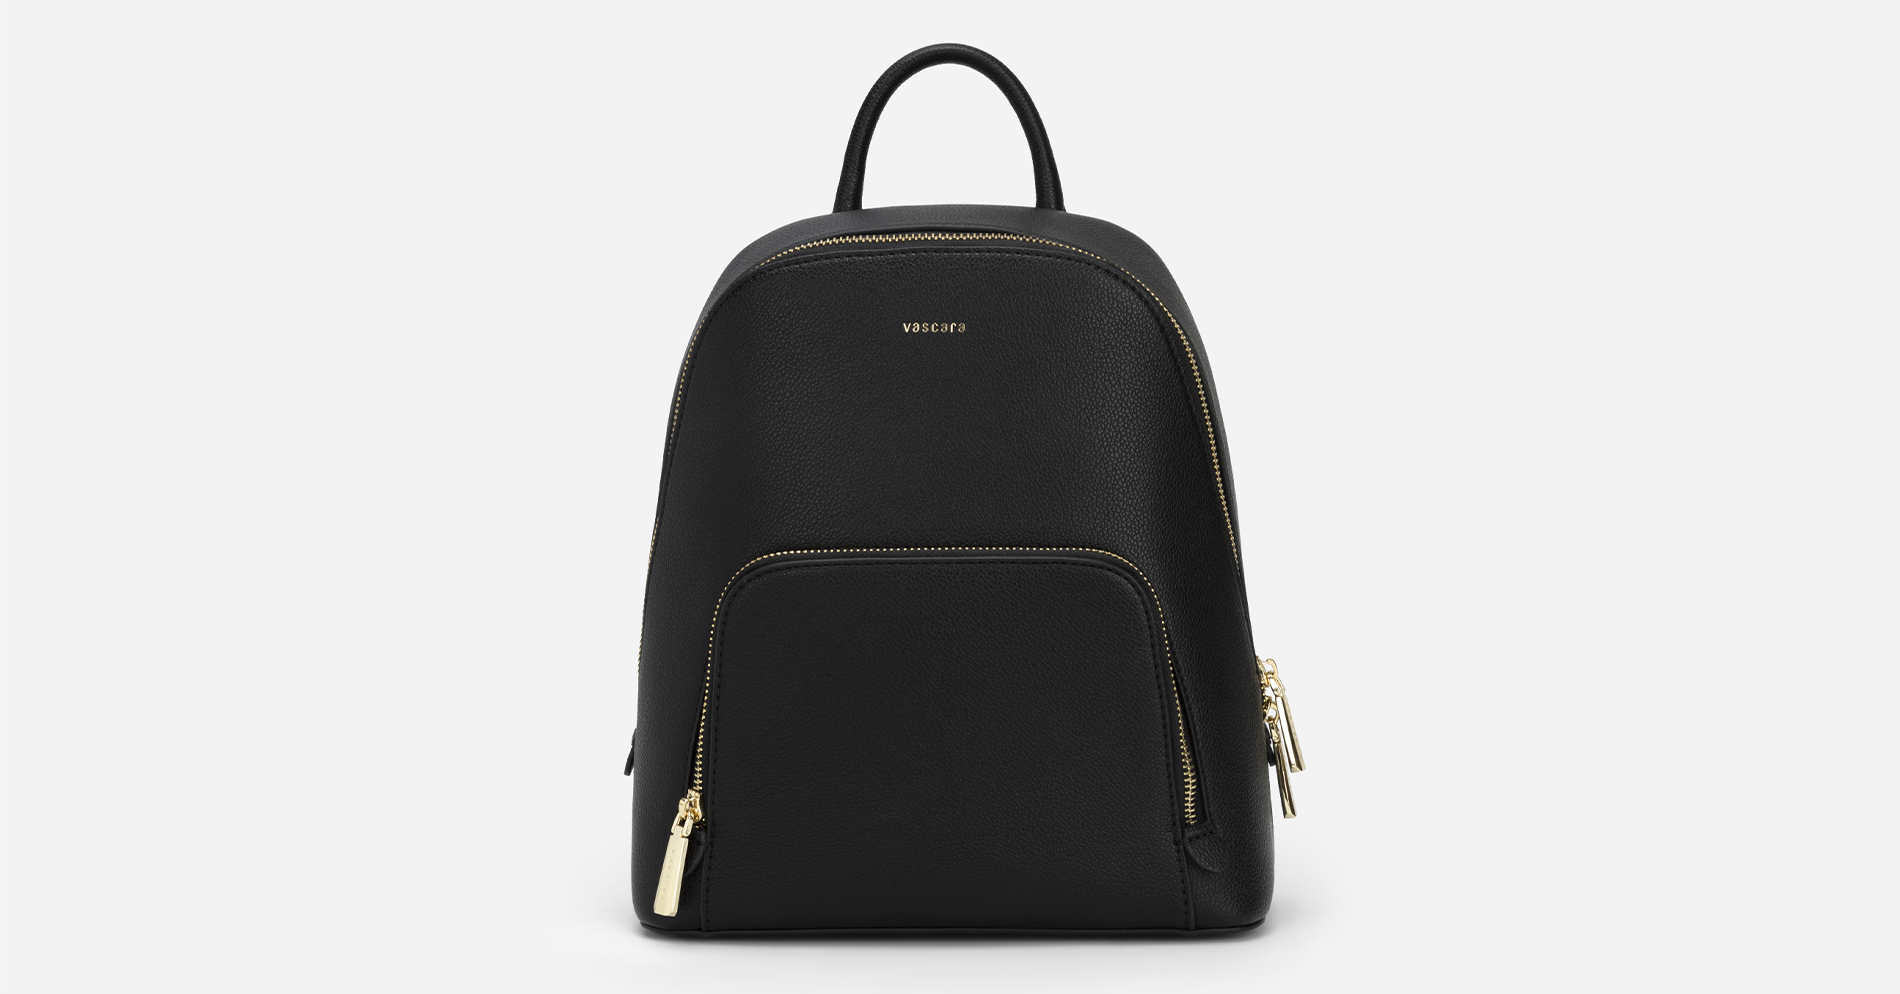 Black Edge Double Compartment Backpack - BAK 0169 - Black | VASCARA